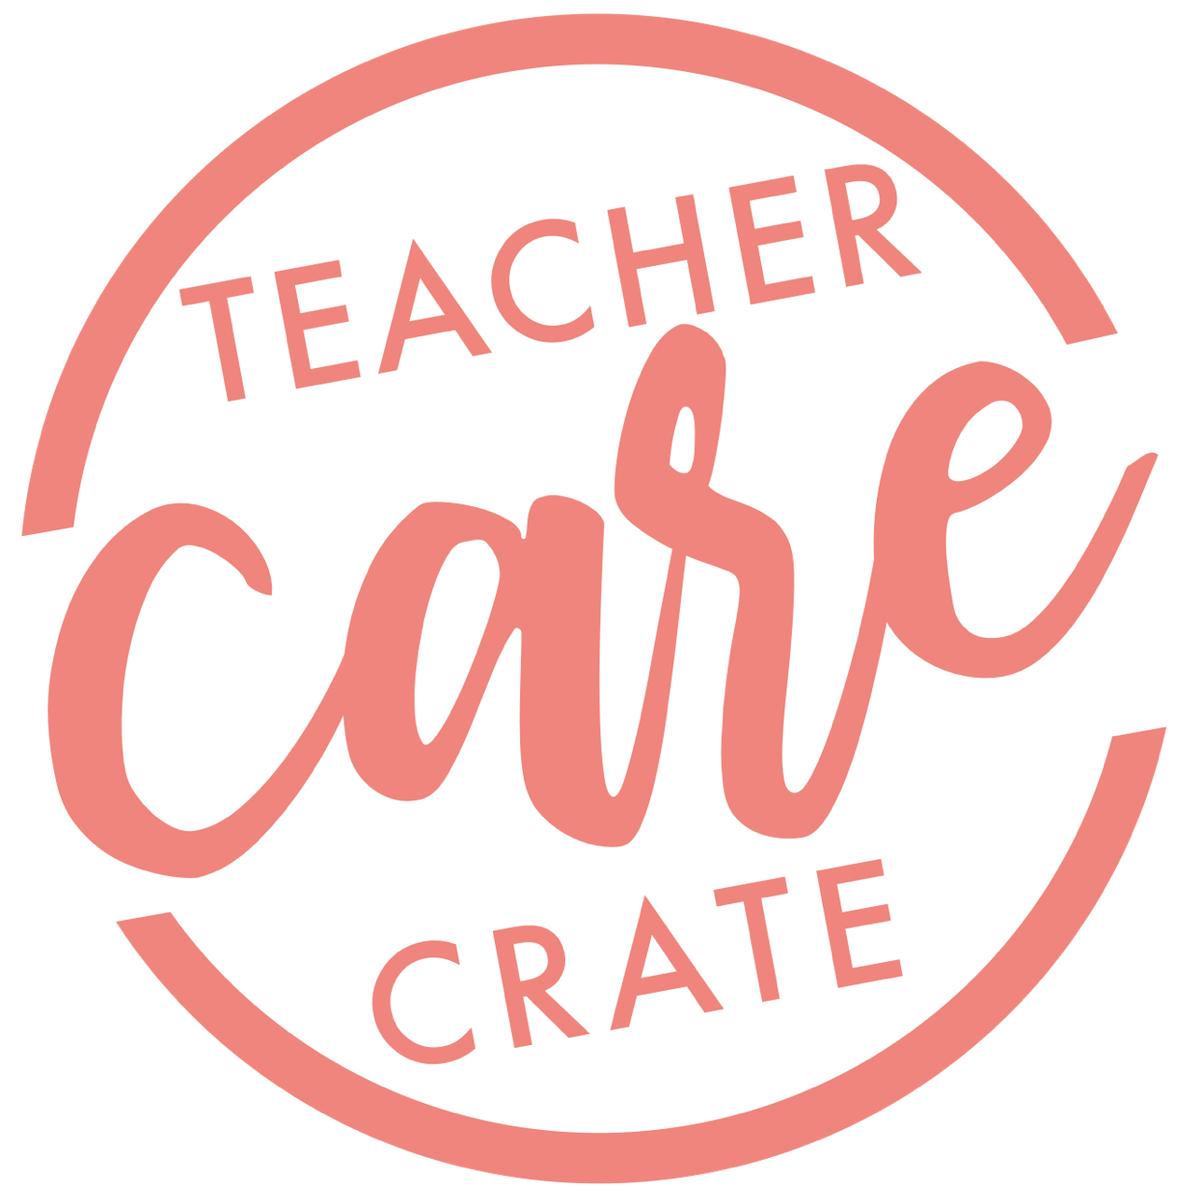 Teacher Care's images